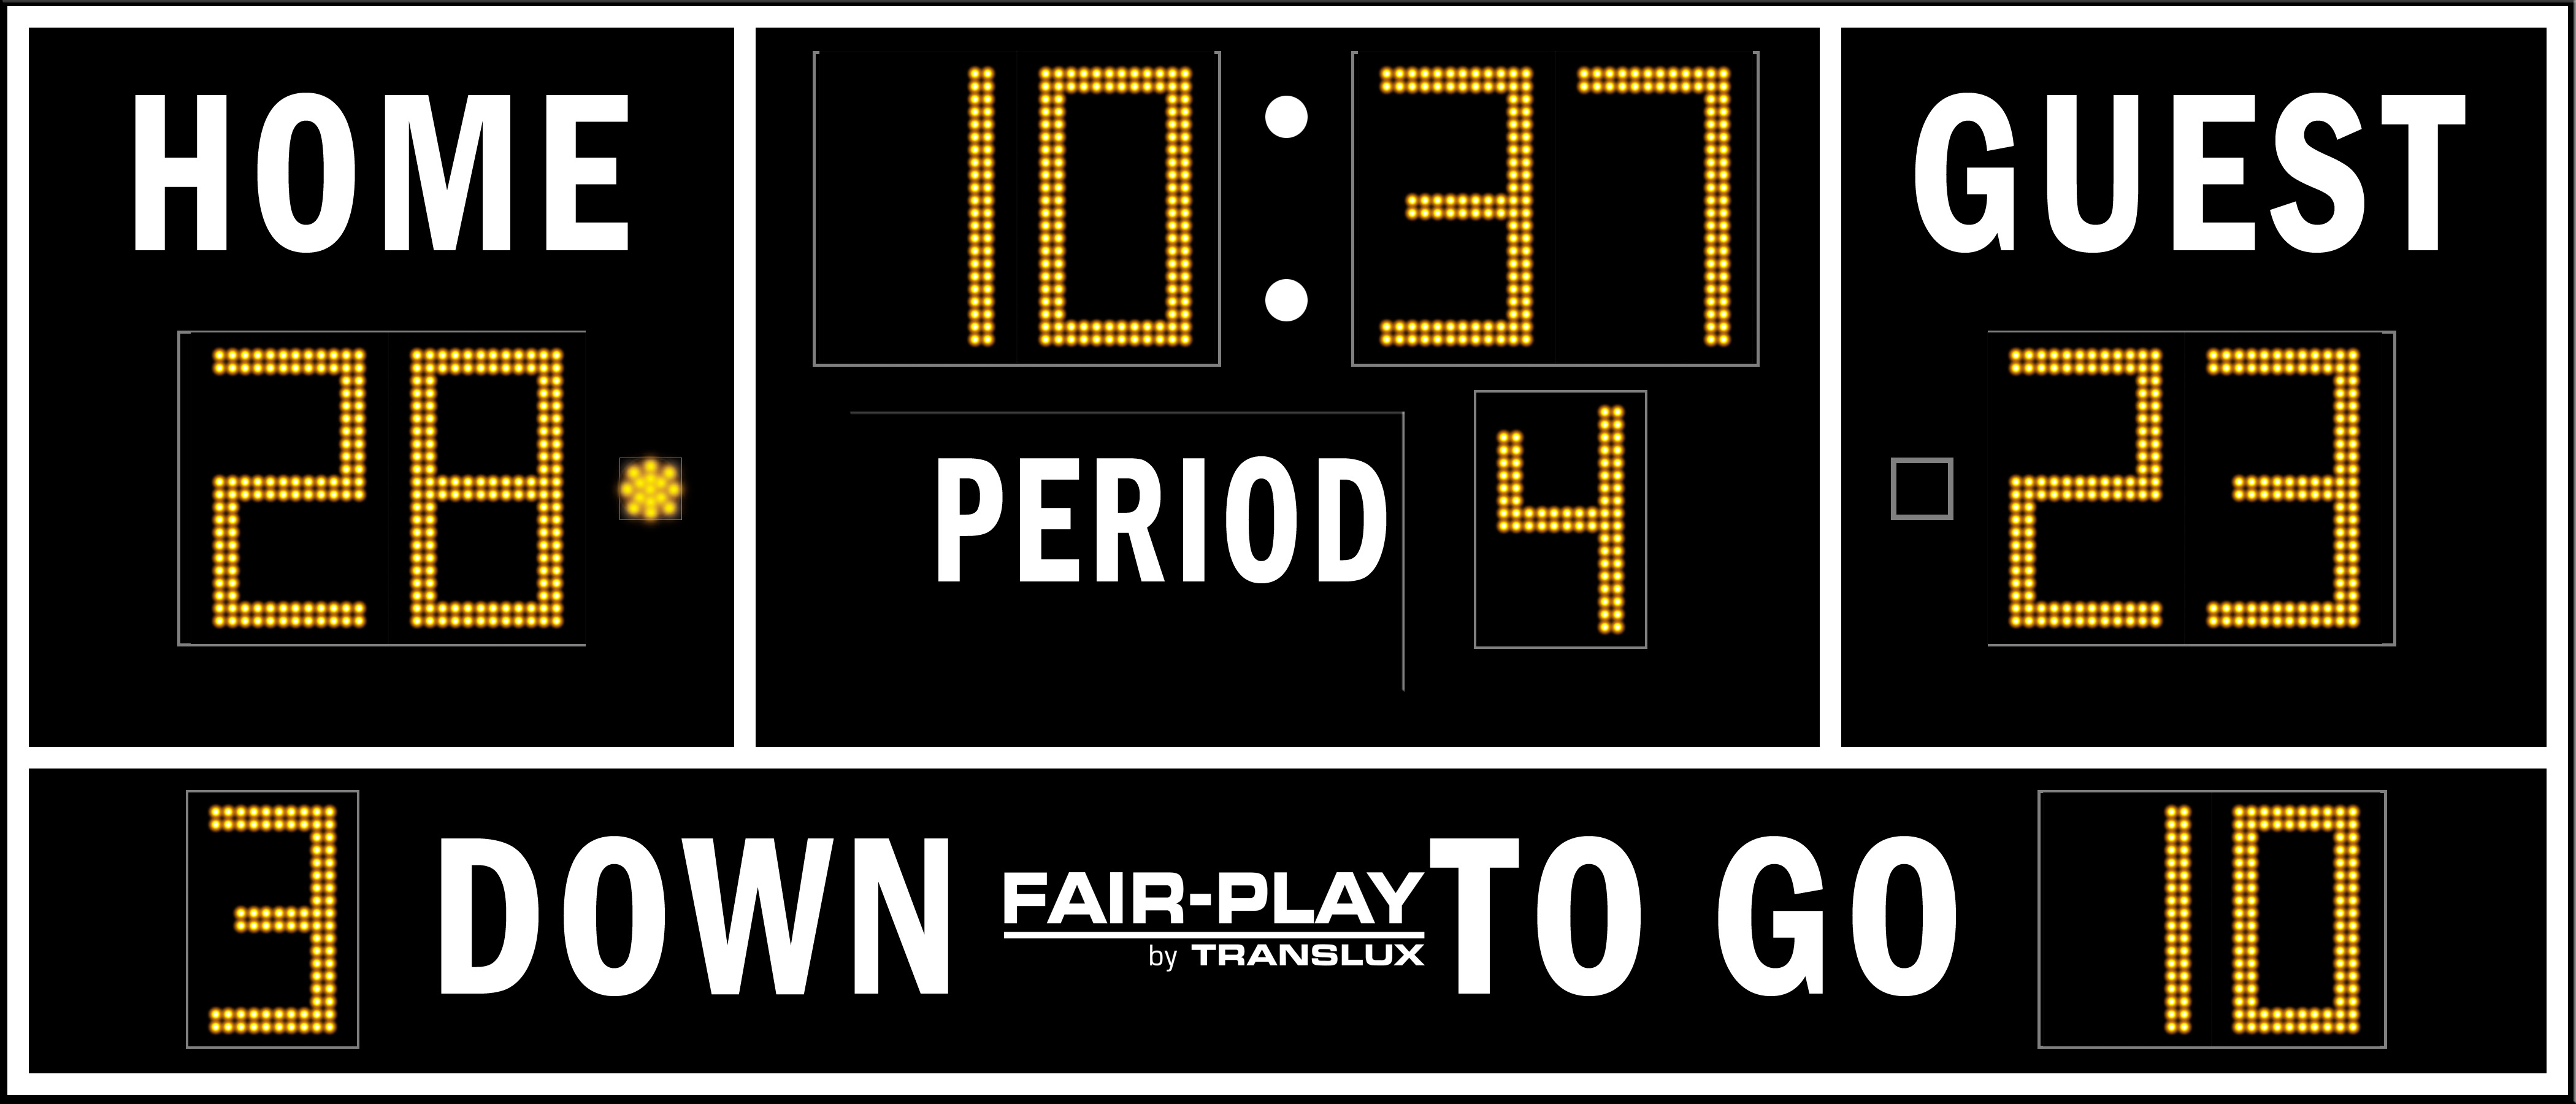 Fair-Play BB-1500-4 Basketball Scoreboard